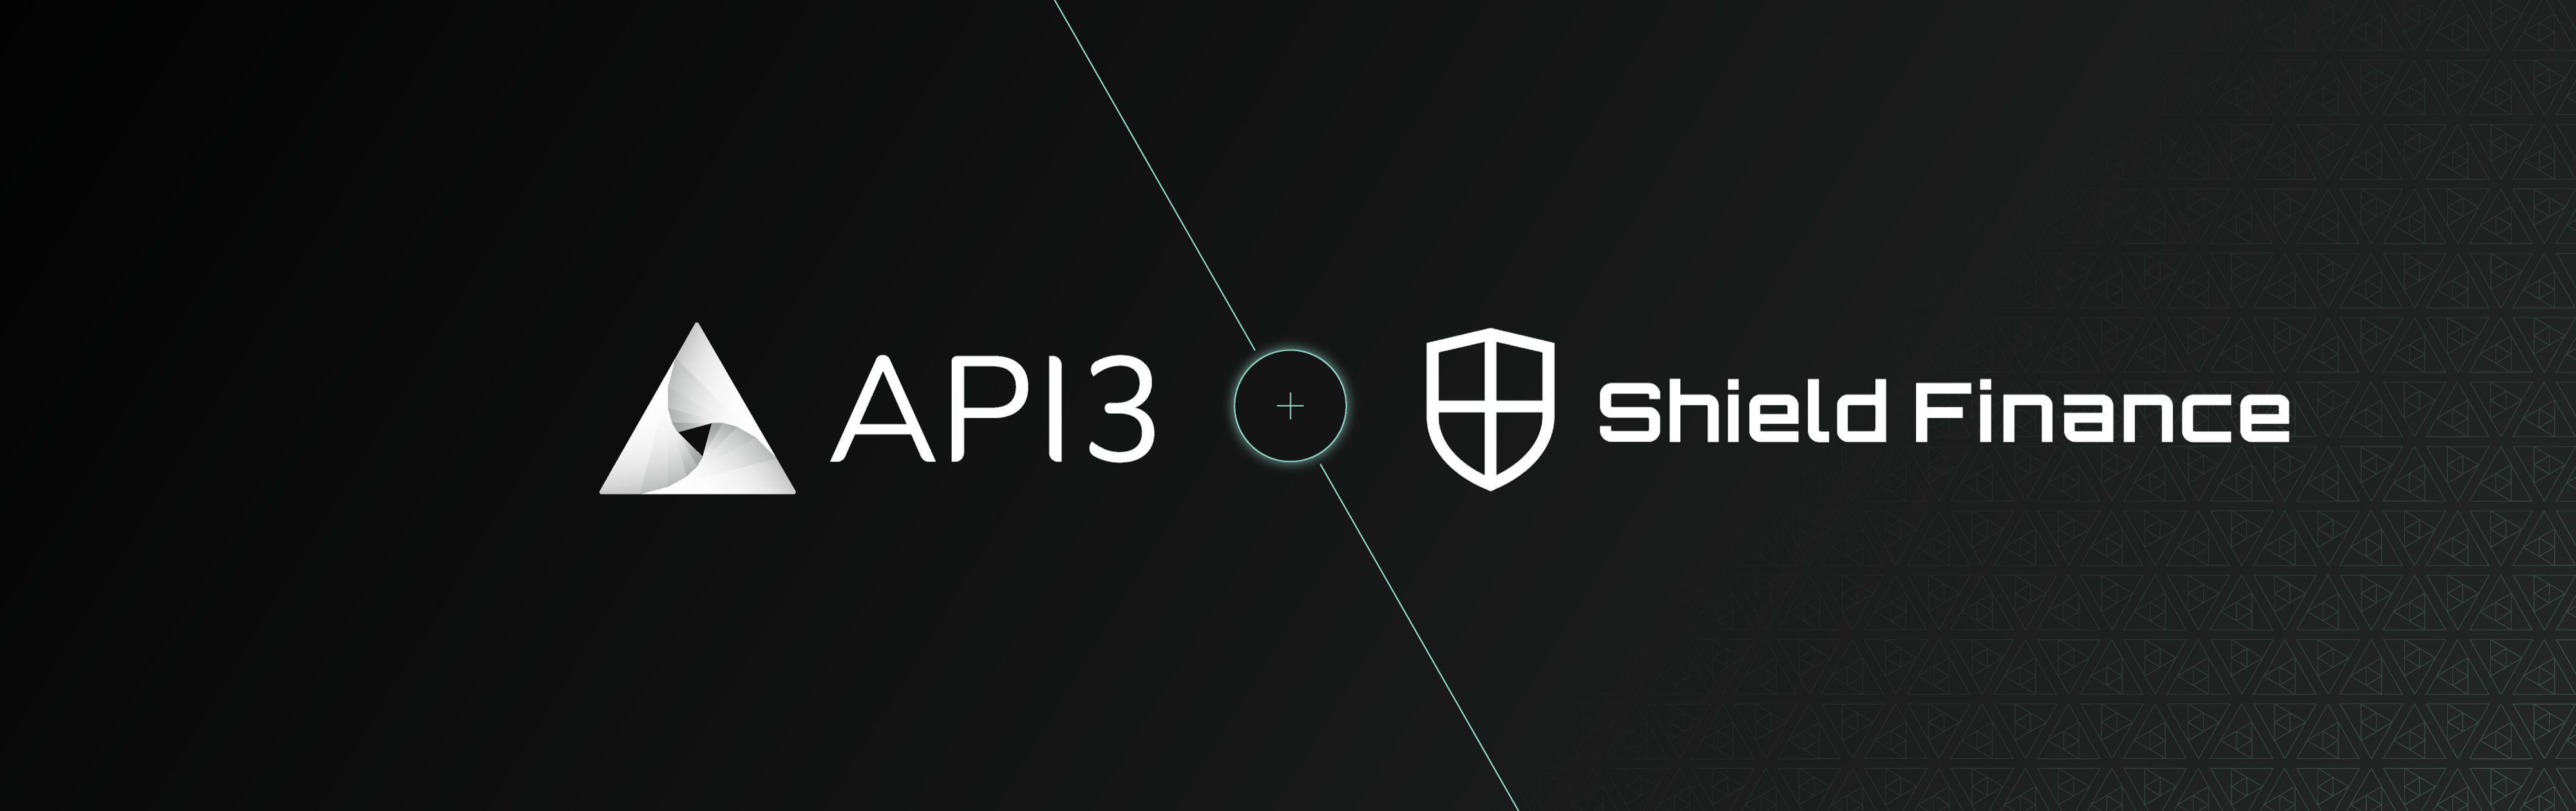 API3 x Shield Finance Partnership Announcement - Smart ...